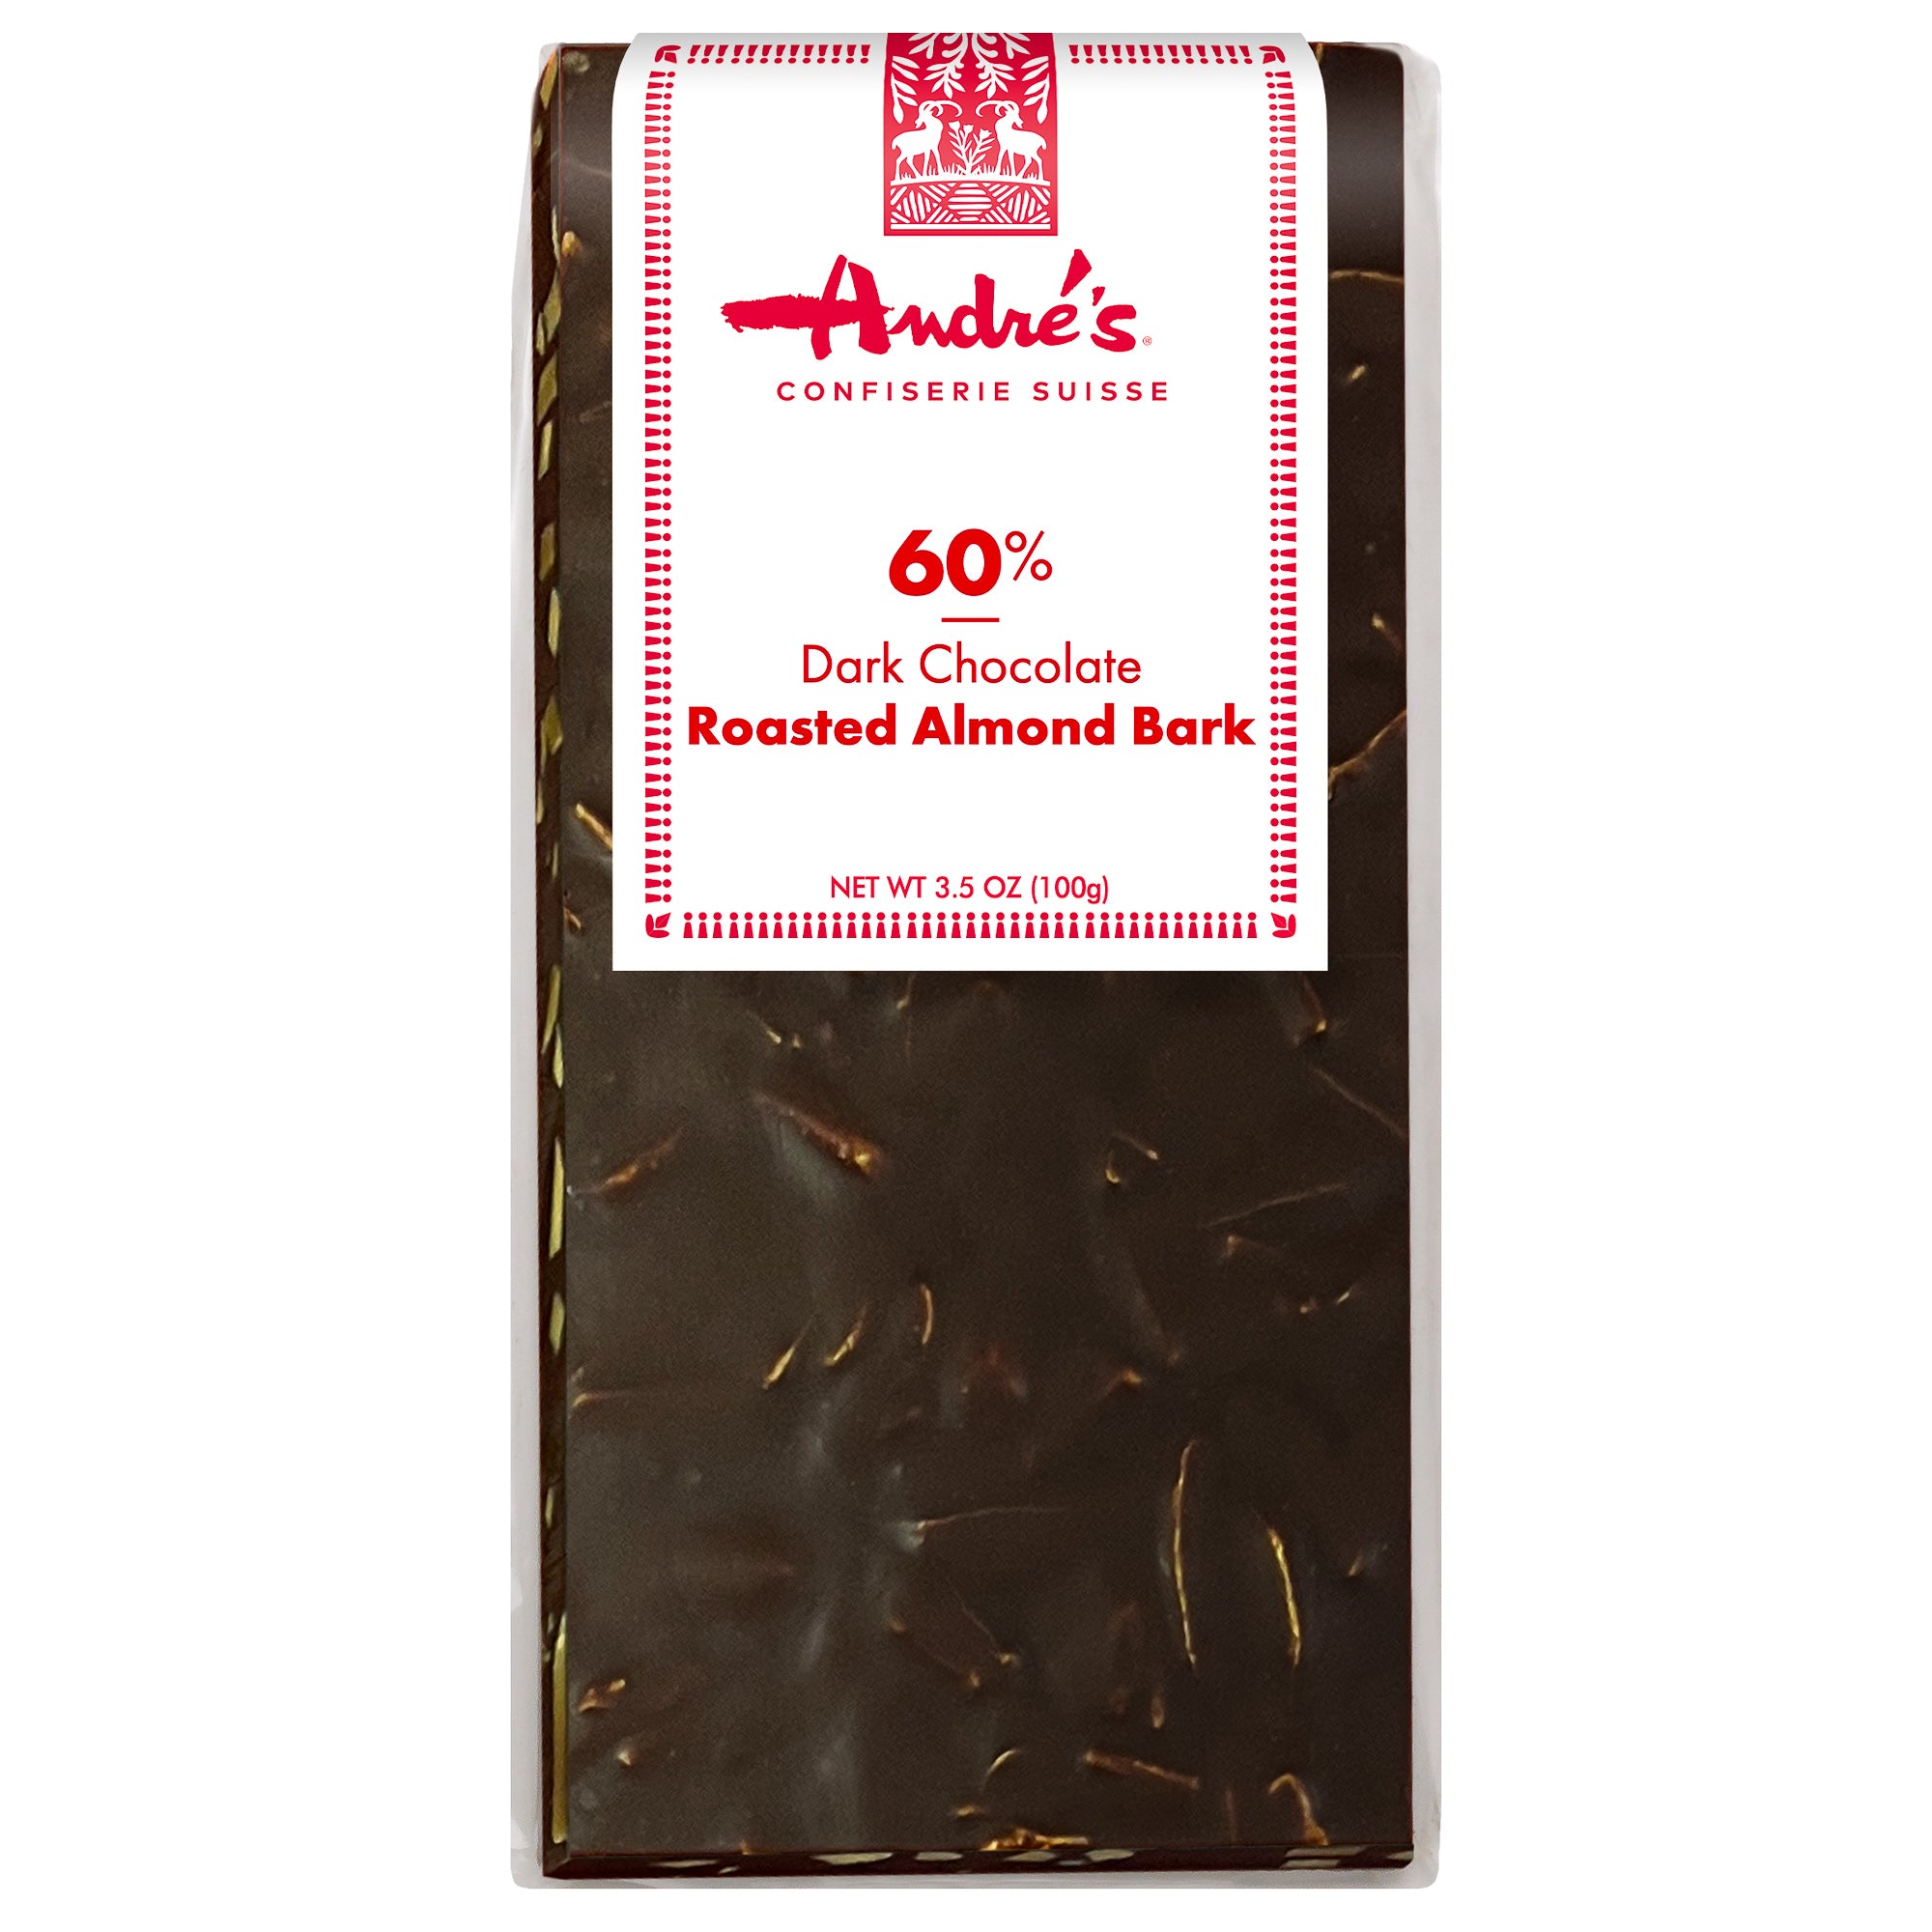 Dark Chocolate Roasted Almond Bark